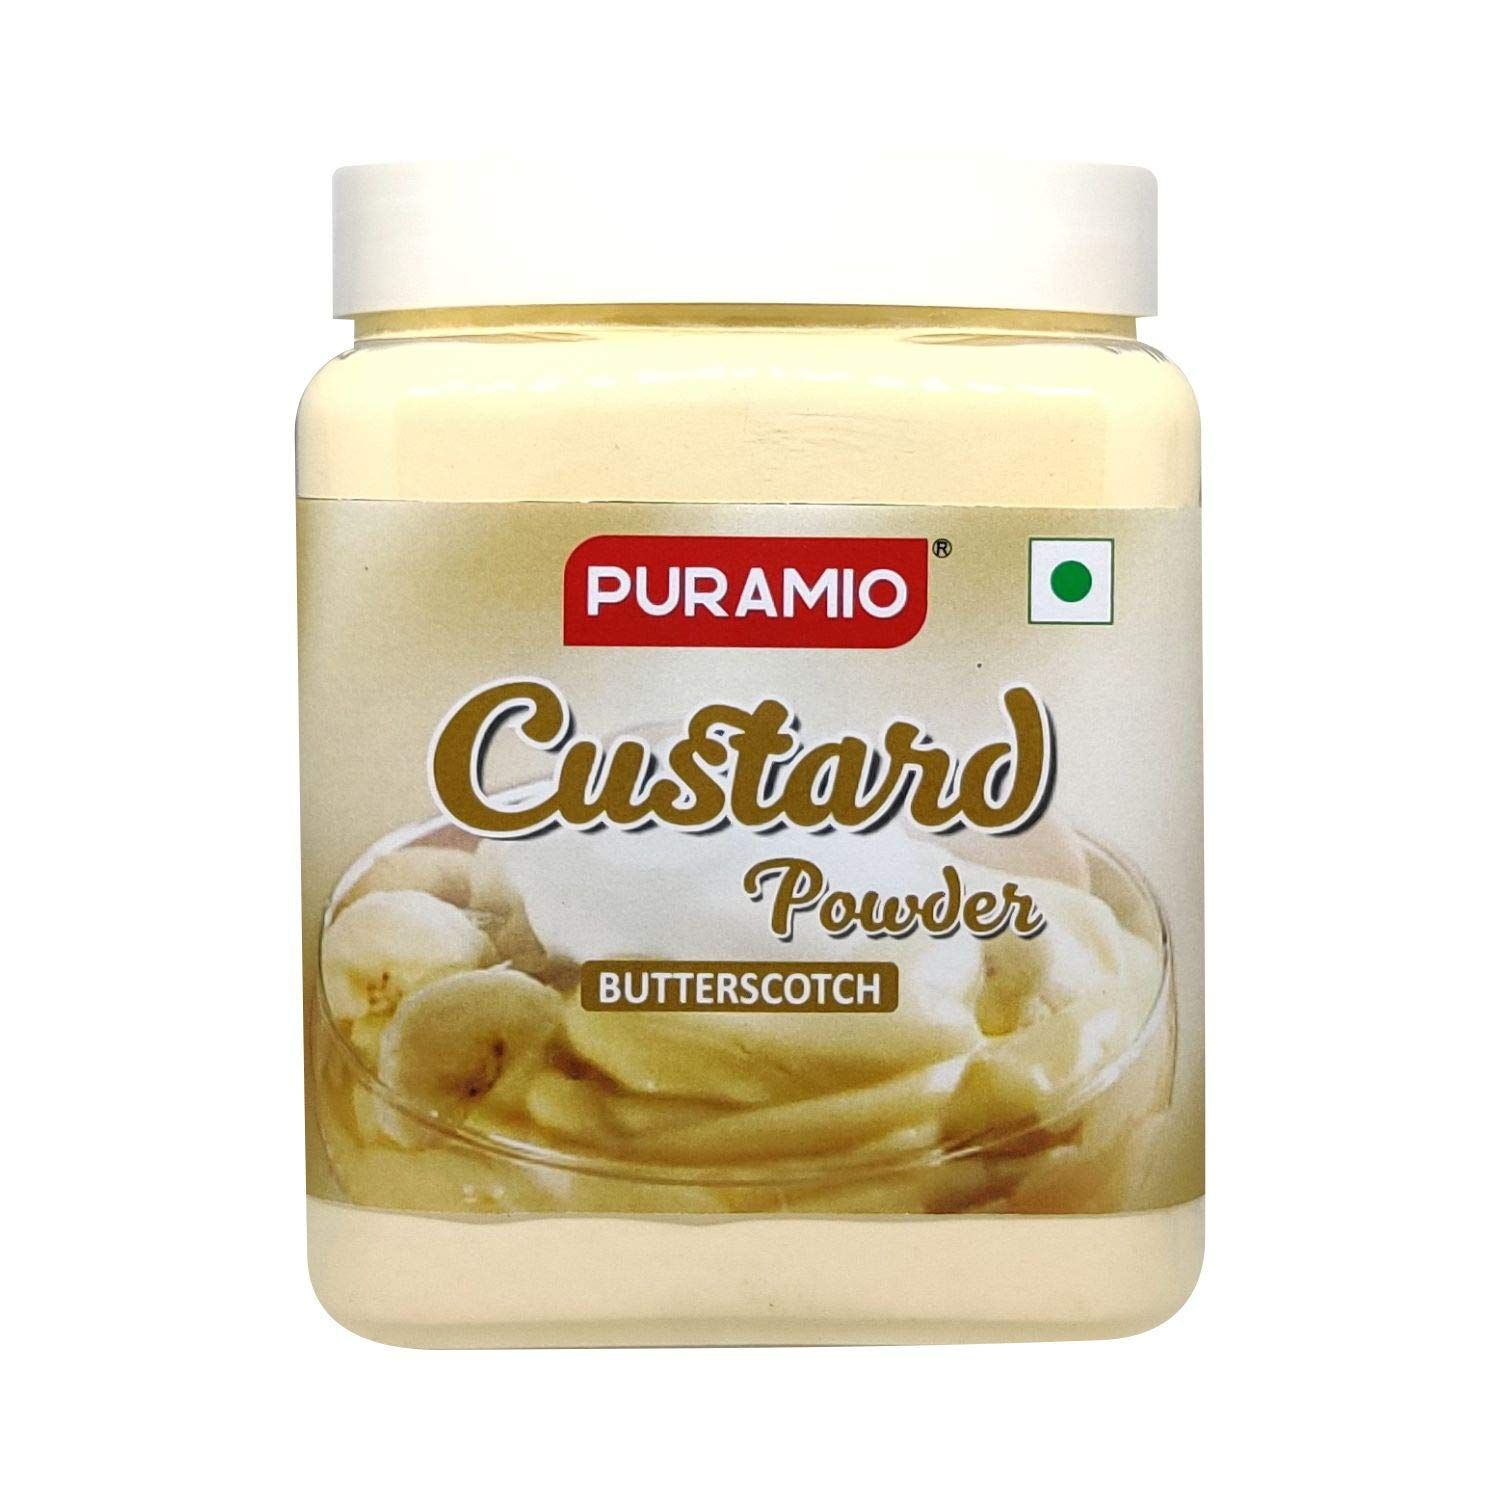 Puramio Custard Powder Butterscotch Image